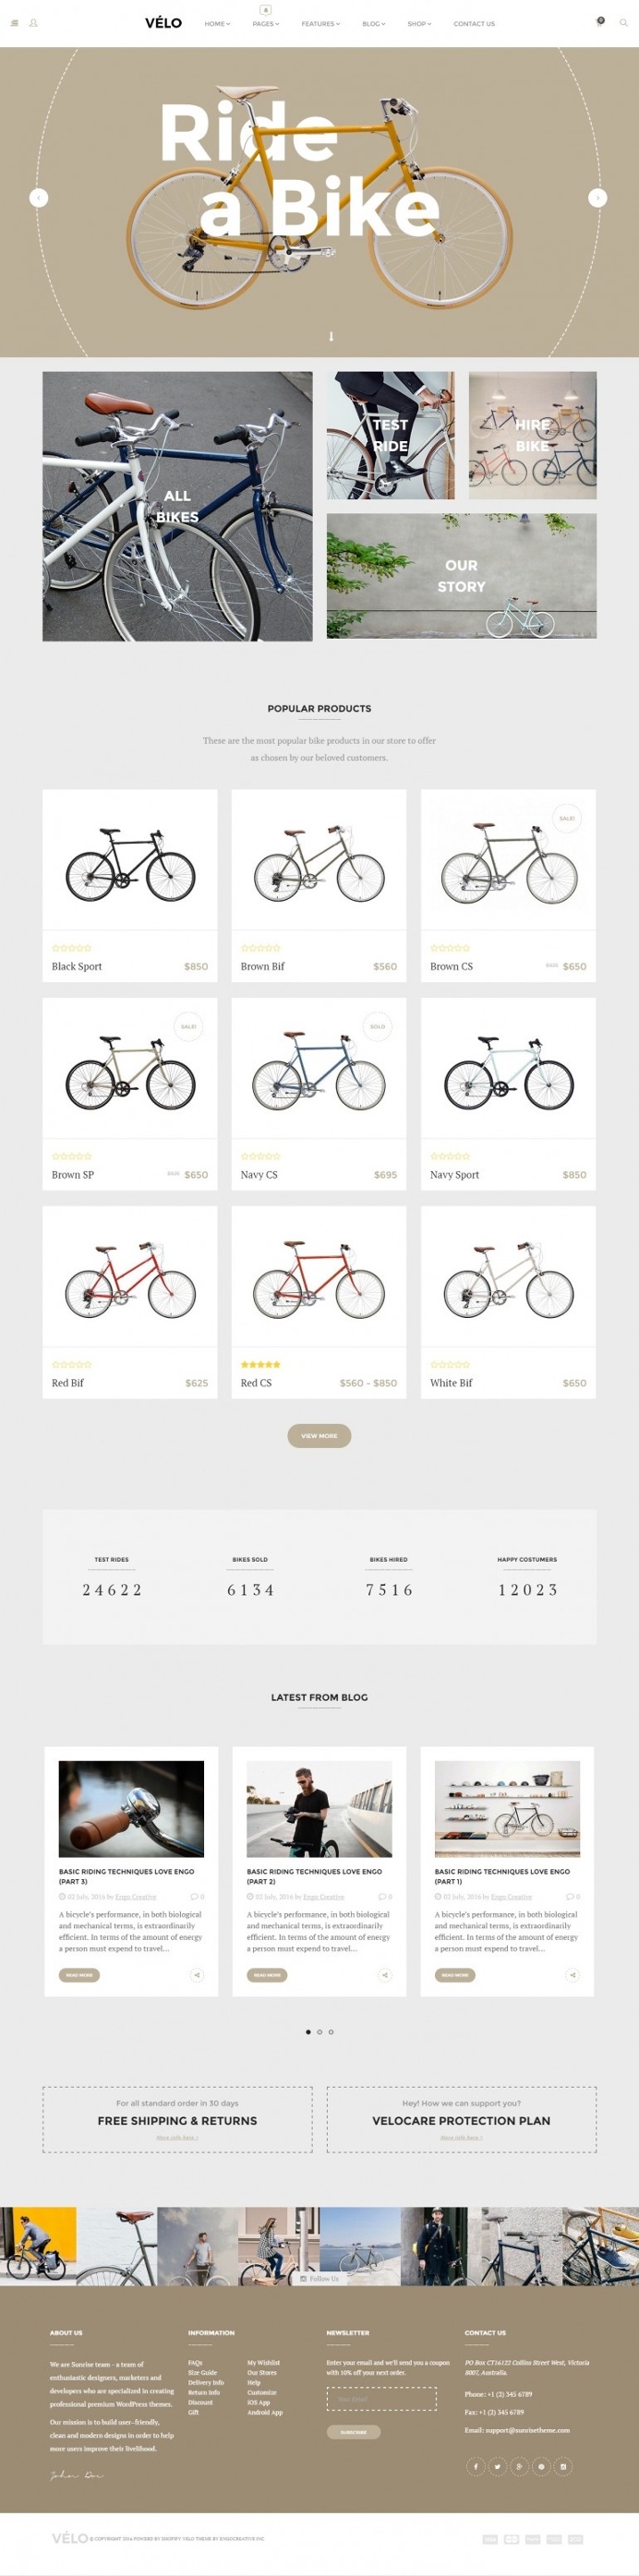 Velo – Bike Store